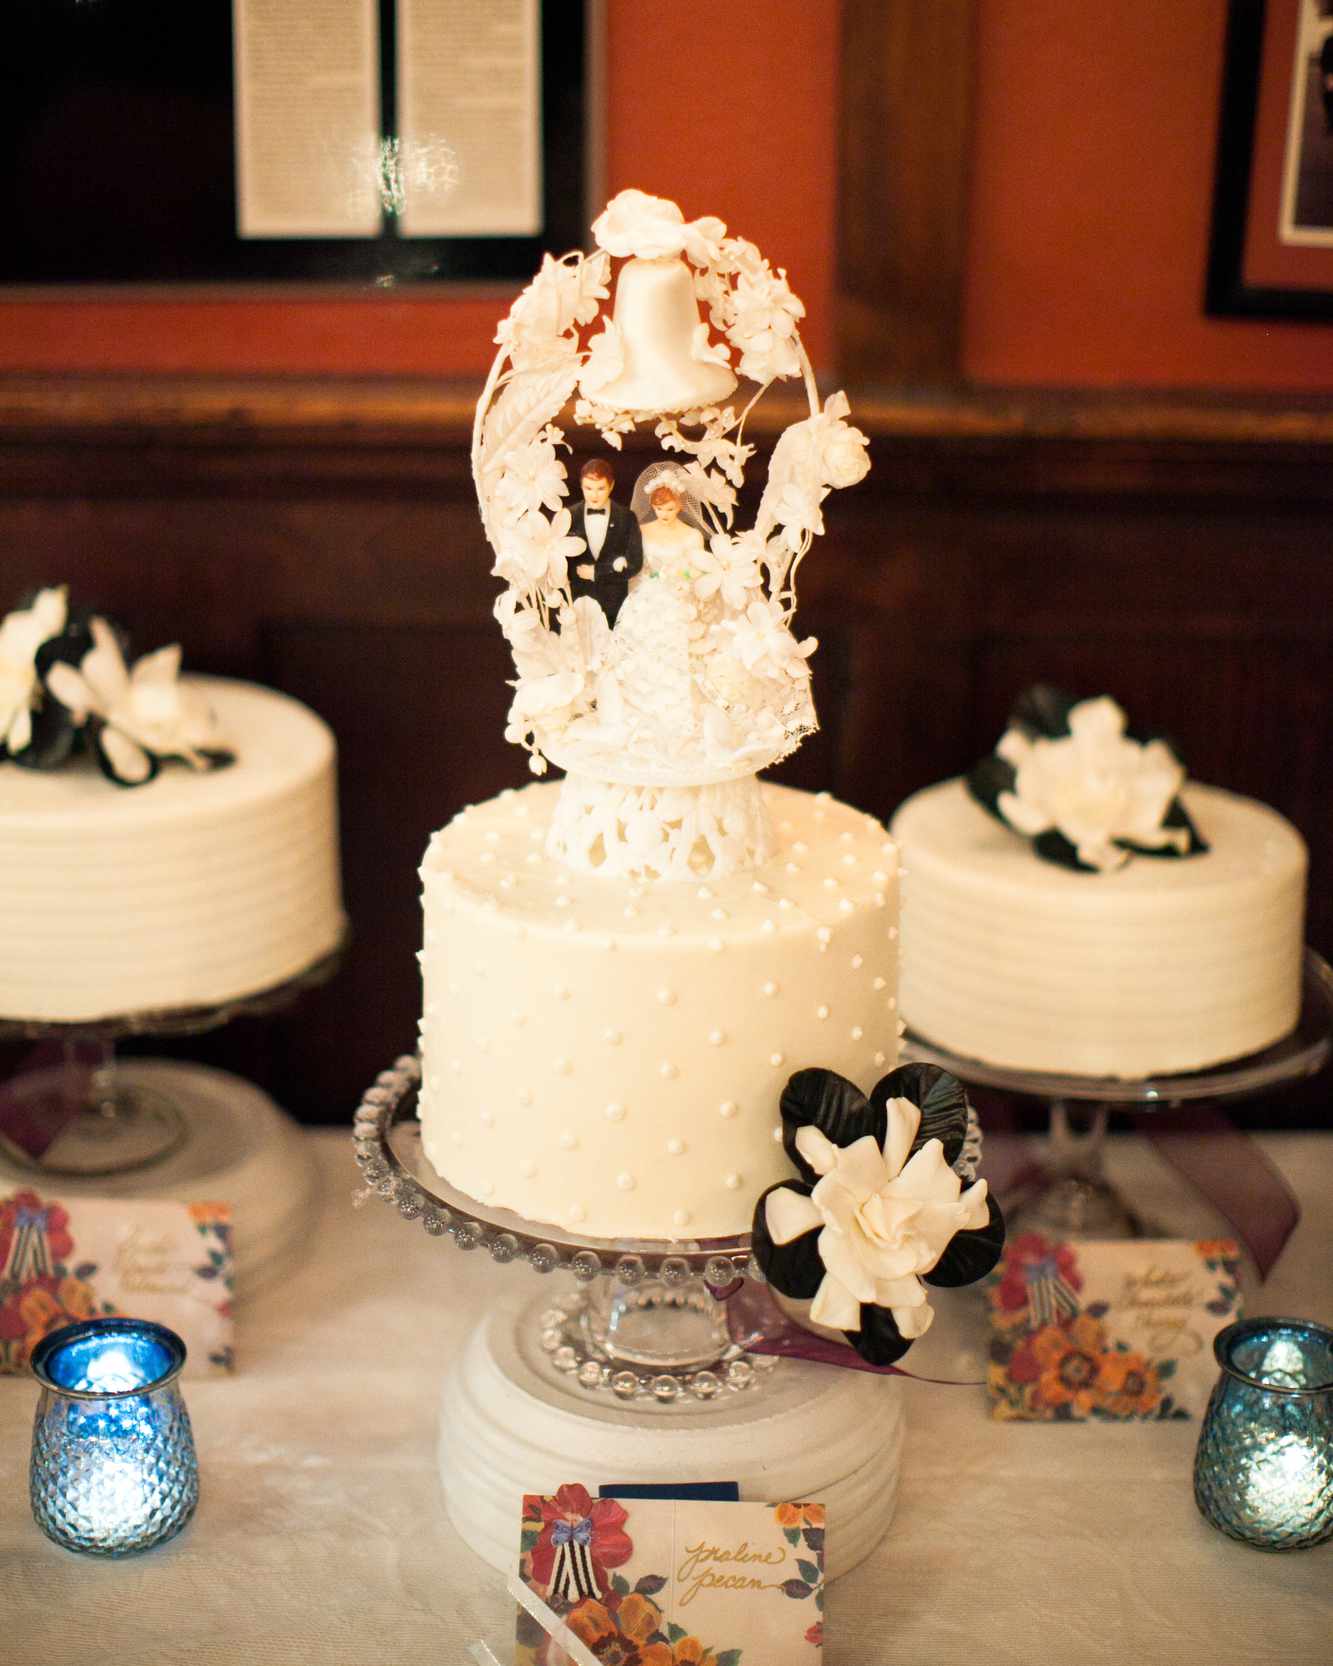 Vintage Wedding Cake Decorating Supplies Vintage Bride And Groom Baking Decor